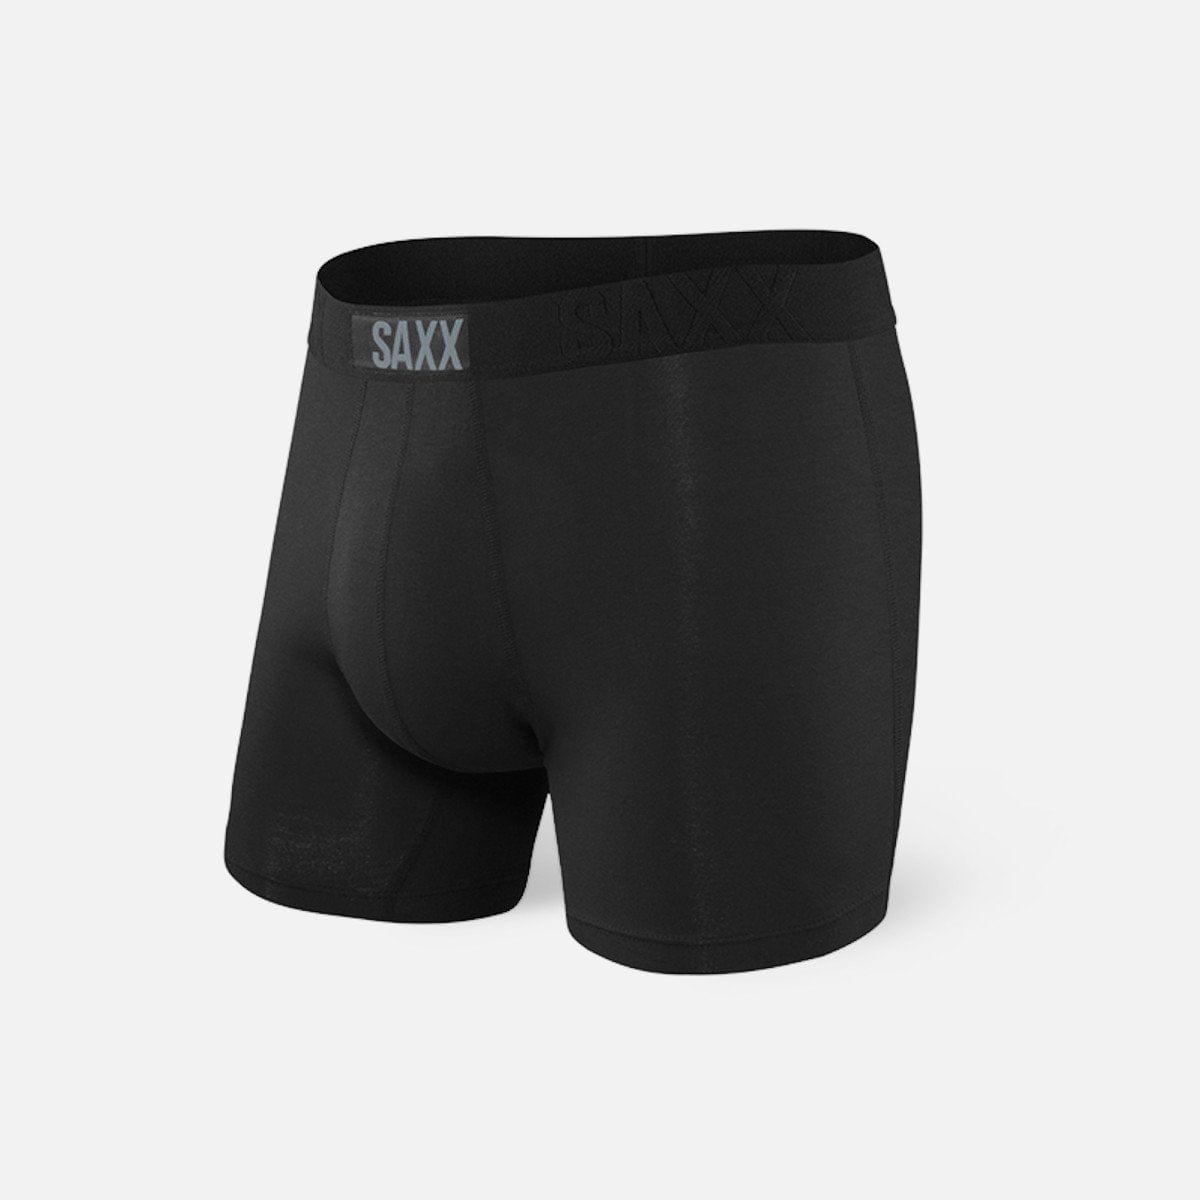 Saxx Vibe Boxers - Black / Grey / Blue (3 Pack)